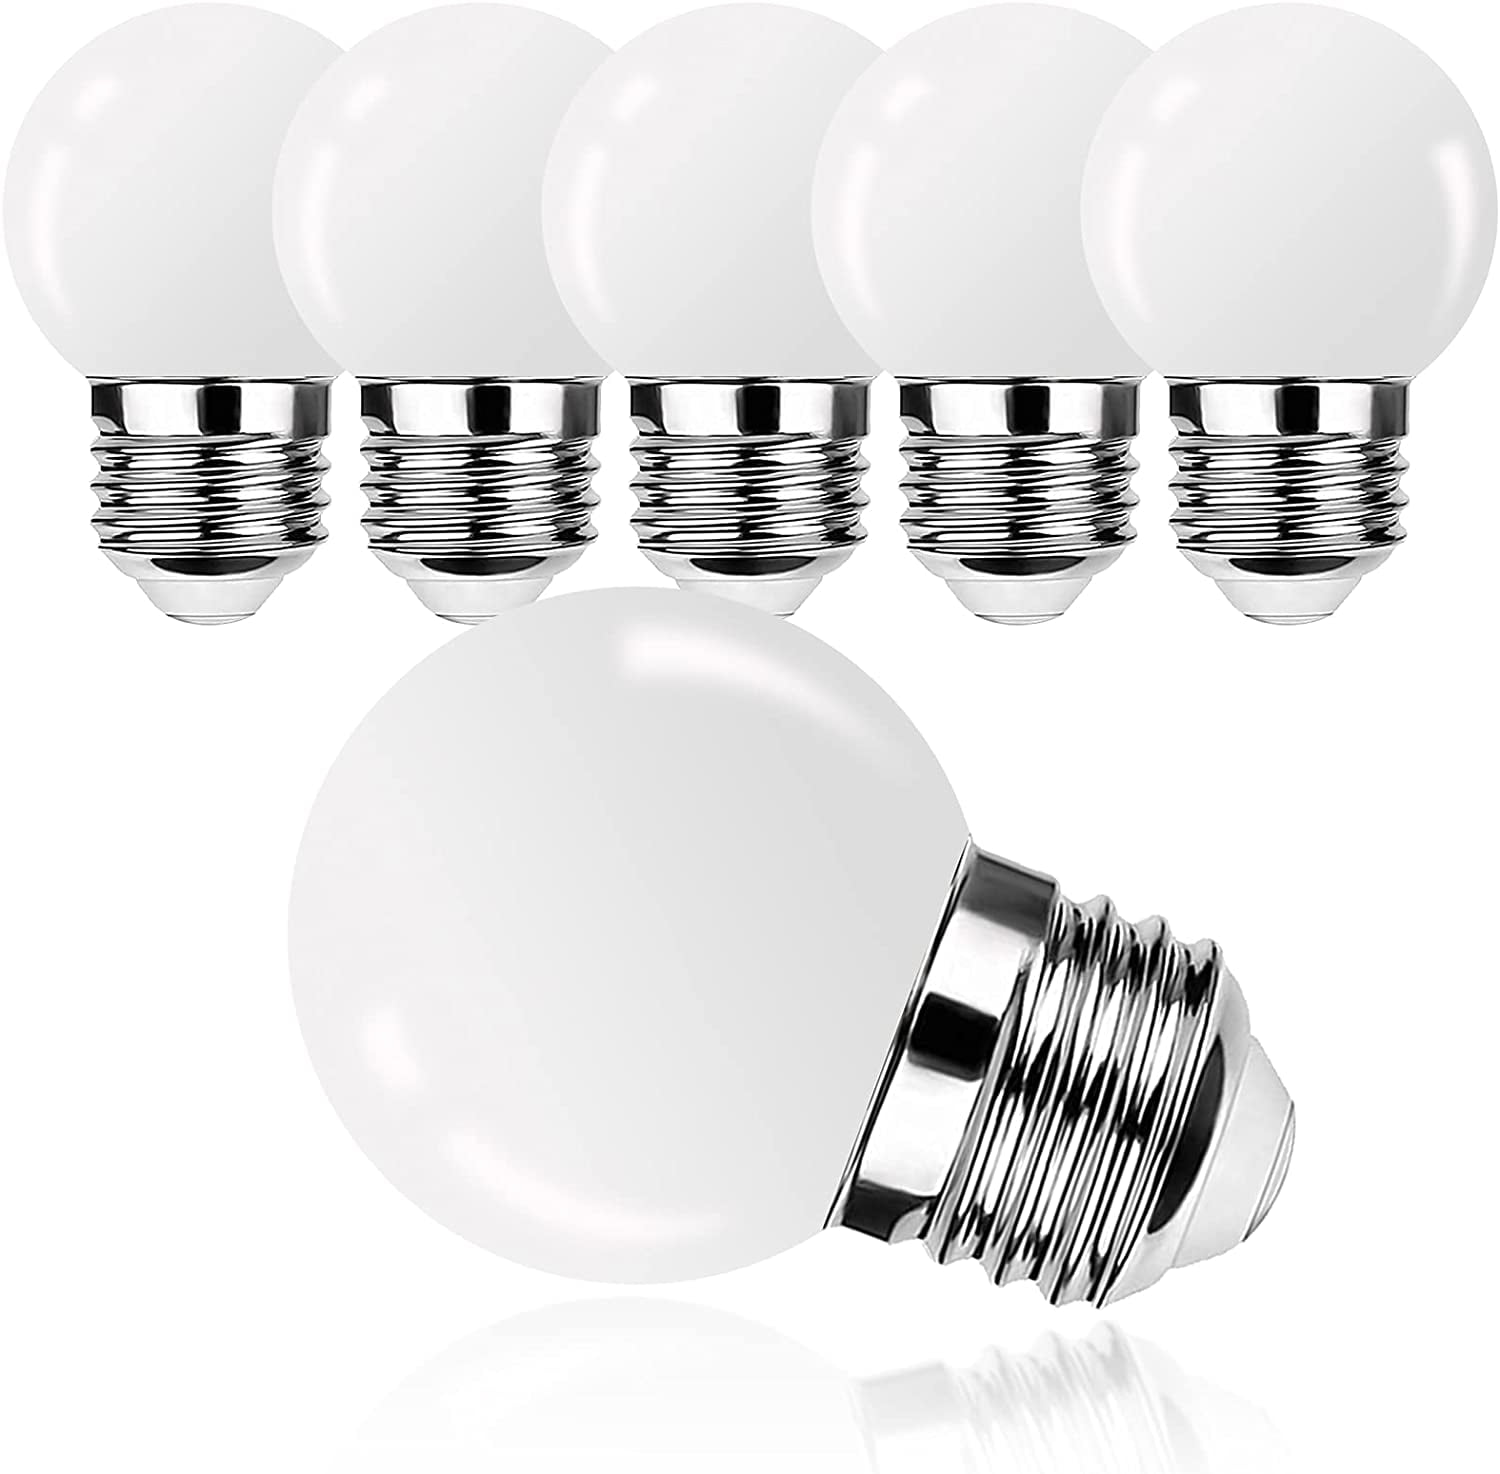 Monnik kraam waarom E26 LED Light Bulb,G14 1W,1 Watt Small Night Light Bulbs,3000K Warm  White,80LM,10W Equivalent,for Bedroom, Ceiling Fan, Table Lamp, Kitchen,  Pendant Fixtures,Vanity,120V,Not Dimmable,6 Pack - Walmart.com